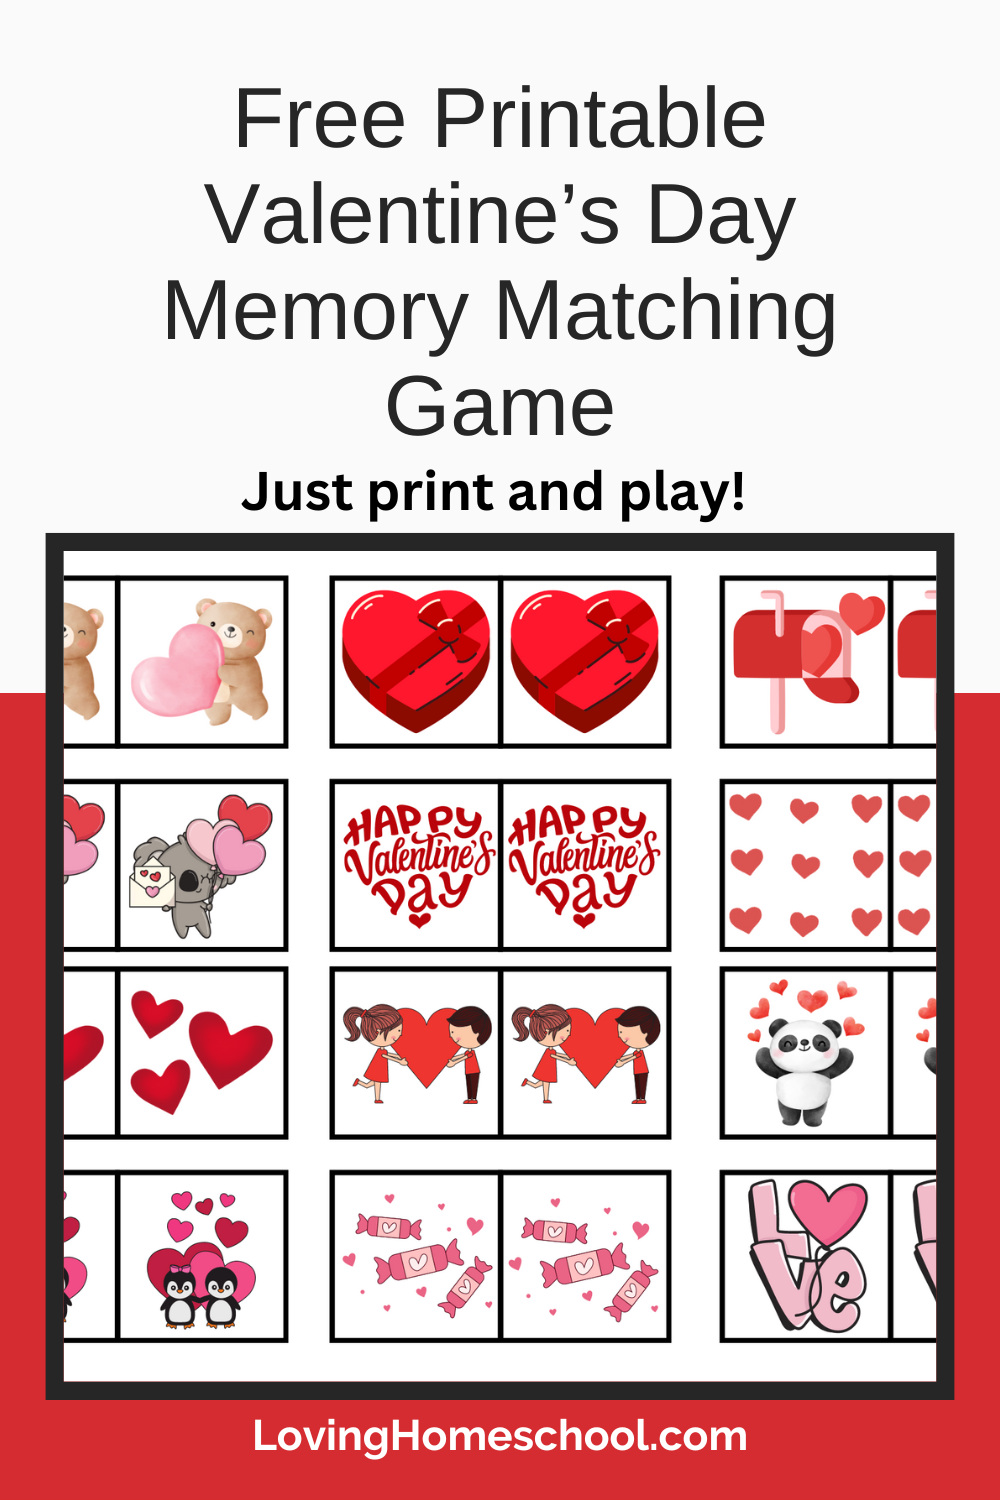 Free Printable Valentine’s Day Memory Matching Game Pinterest Pin